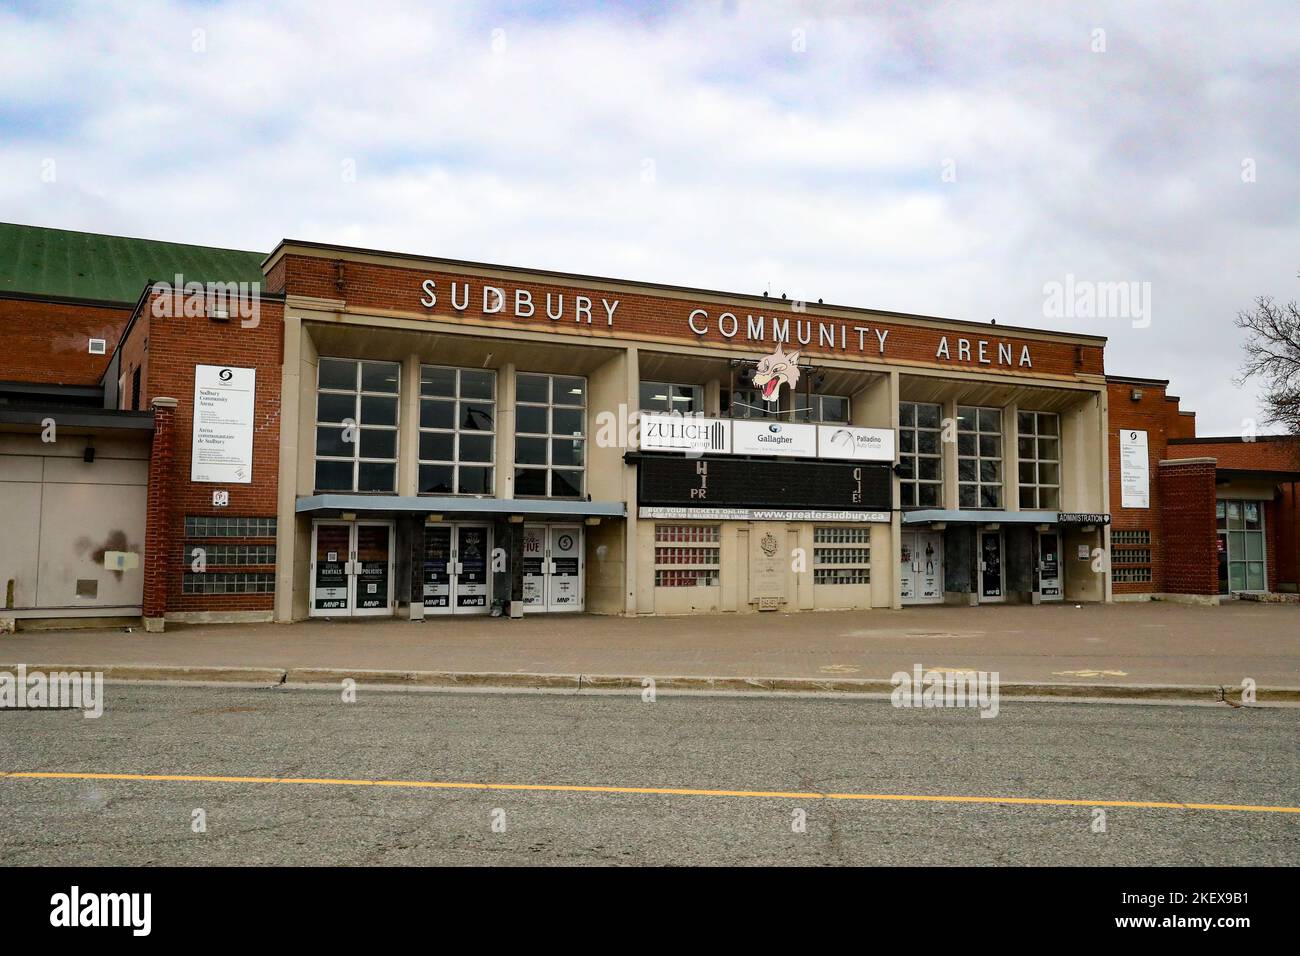 Nov 12 2022, Sudbury Ontario Canada, Sudbury Community Arena. Luke Durda/Alamy Stock Photo